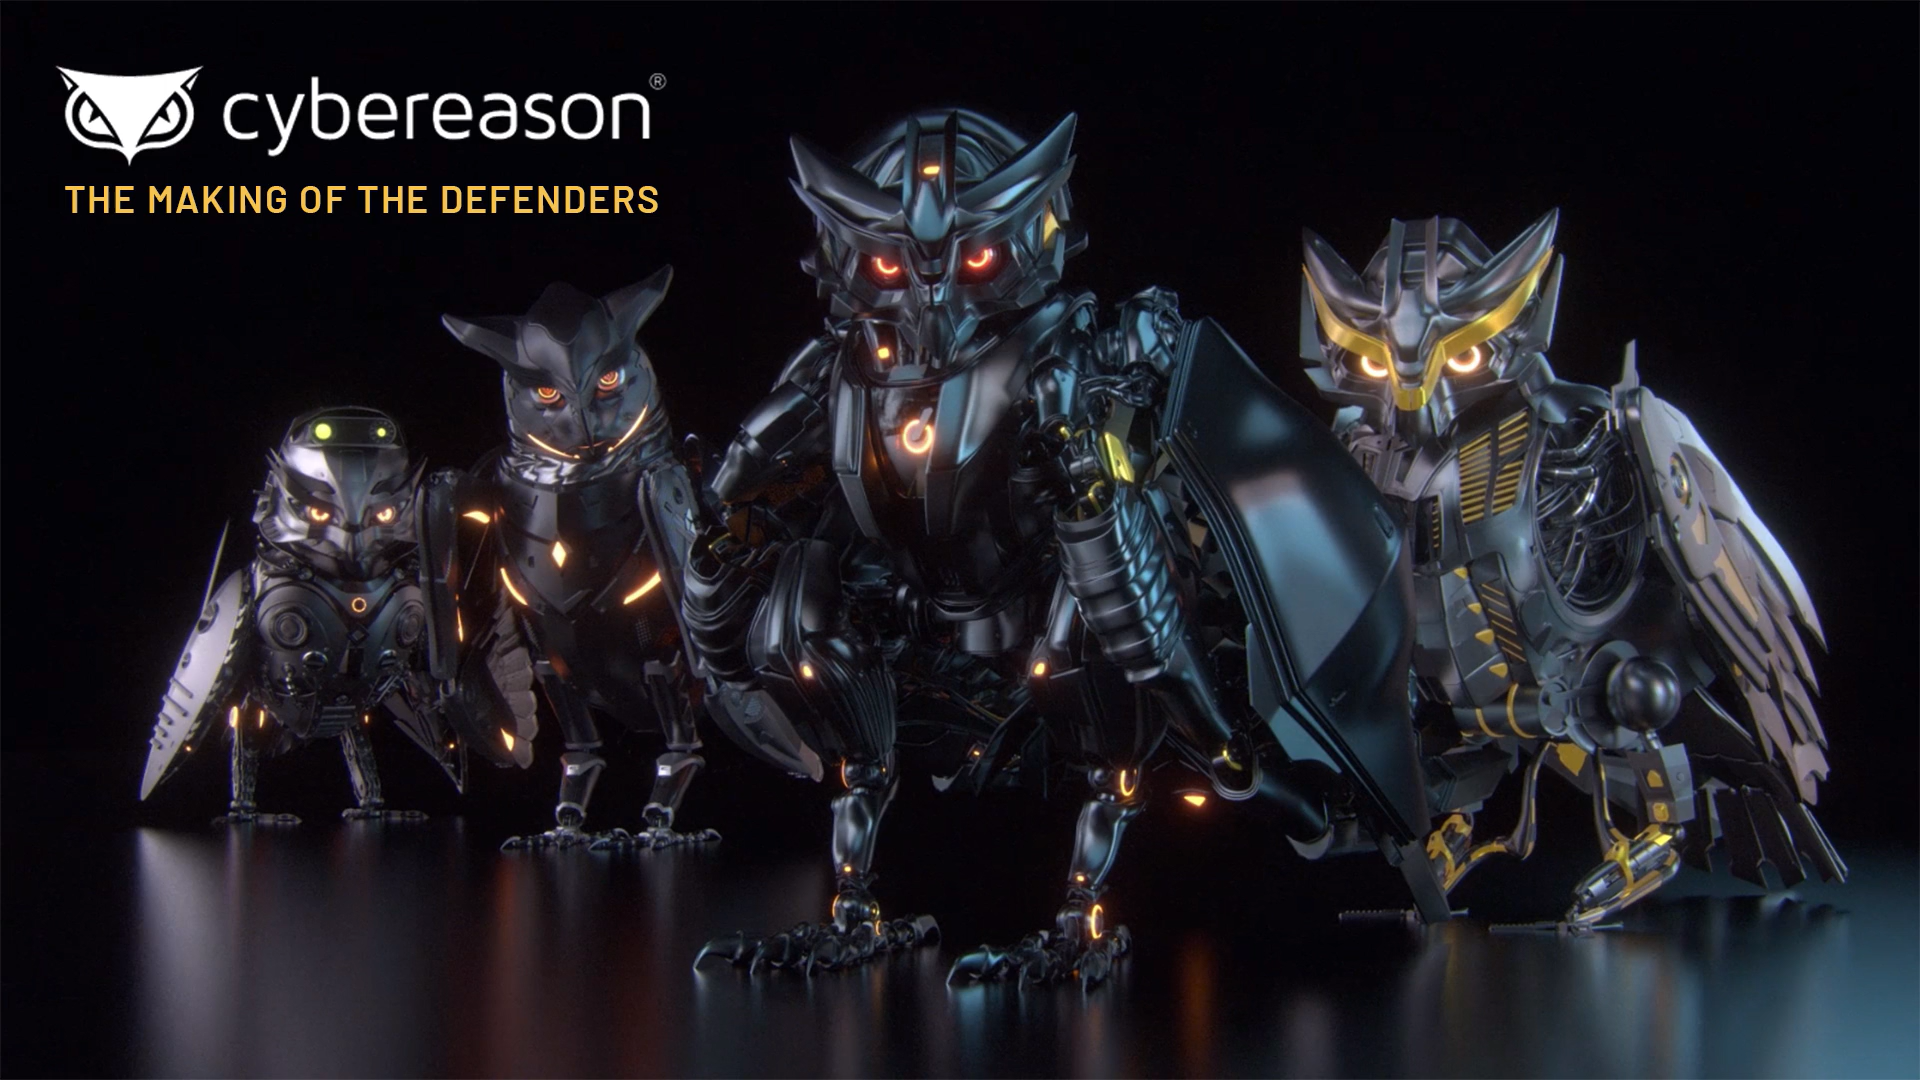 Meet the League of Defenders